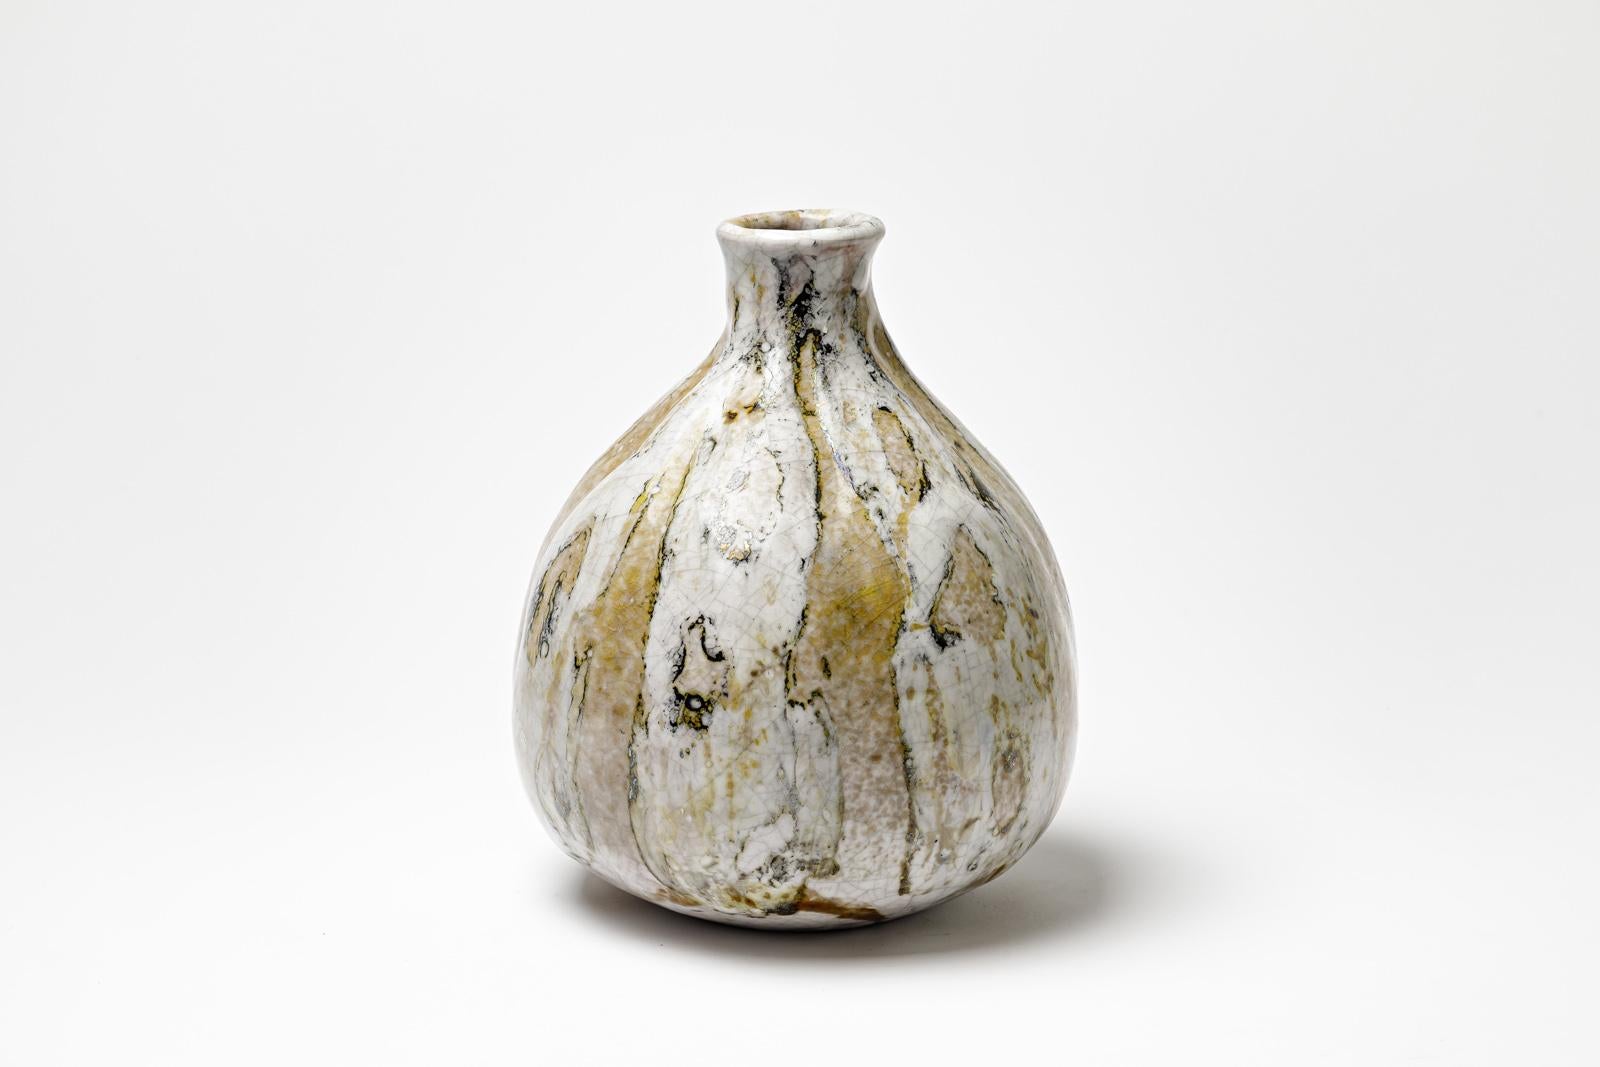 White and yellow glazed ceramic vase by Gisèle Buthod Garçon. 
Raku fired. Artist monogram under the base. Circa 1980-1990.
H : 9.8’ x 9.1’ inches.